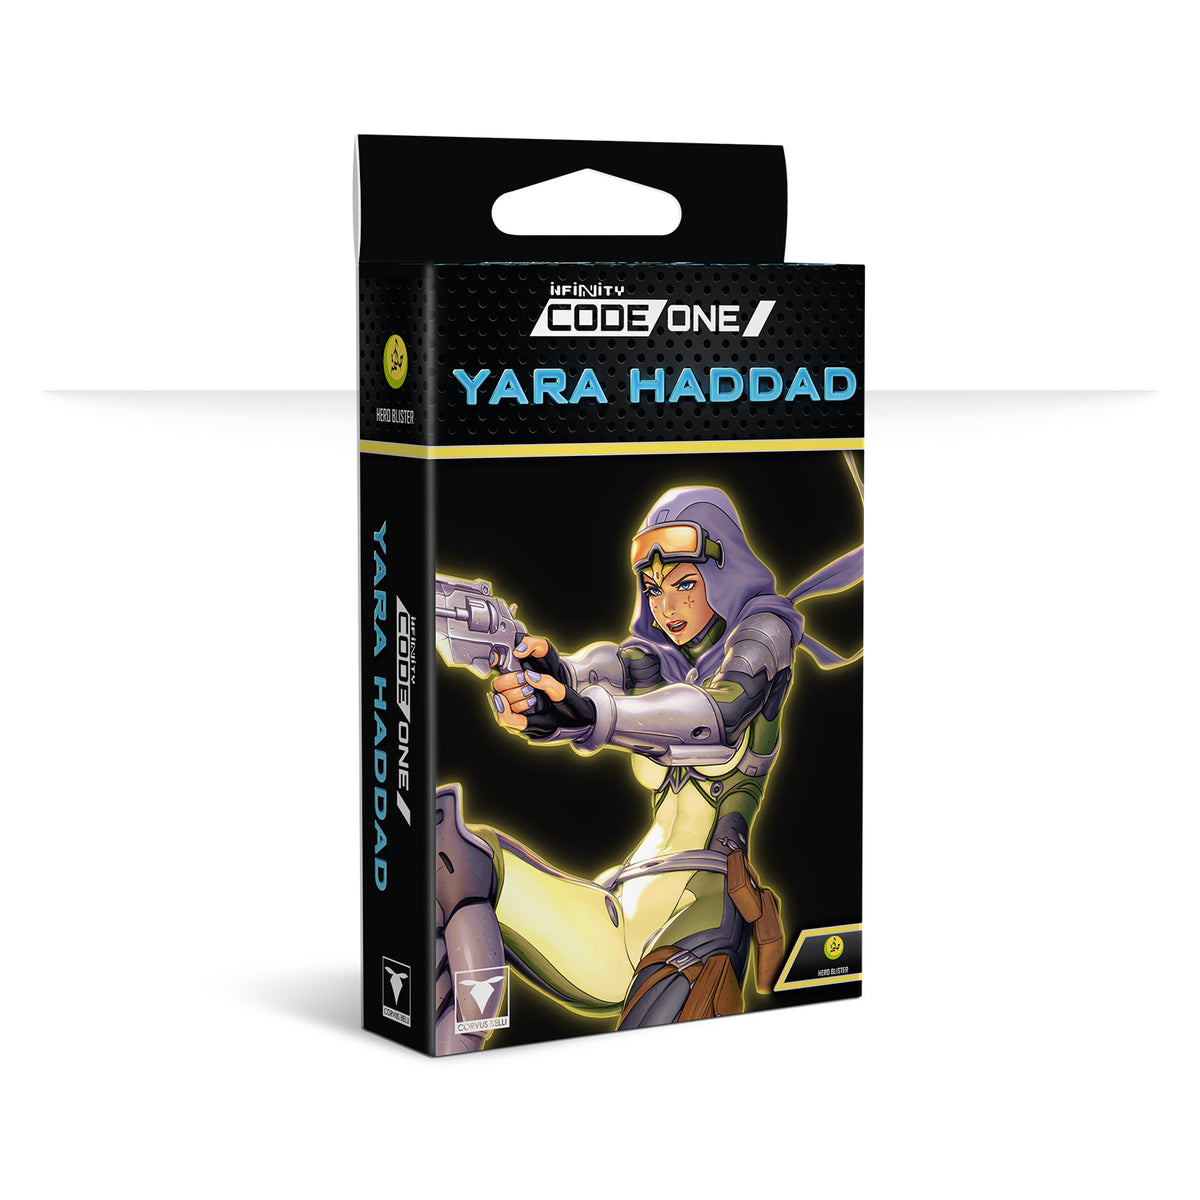 Yara Haddad (Rifle de tirador AP)